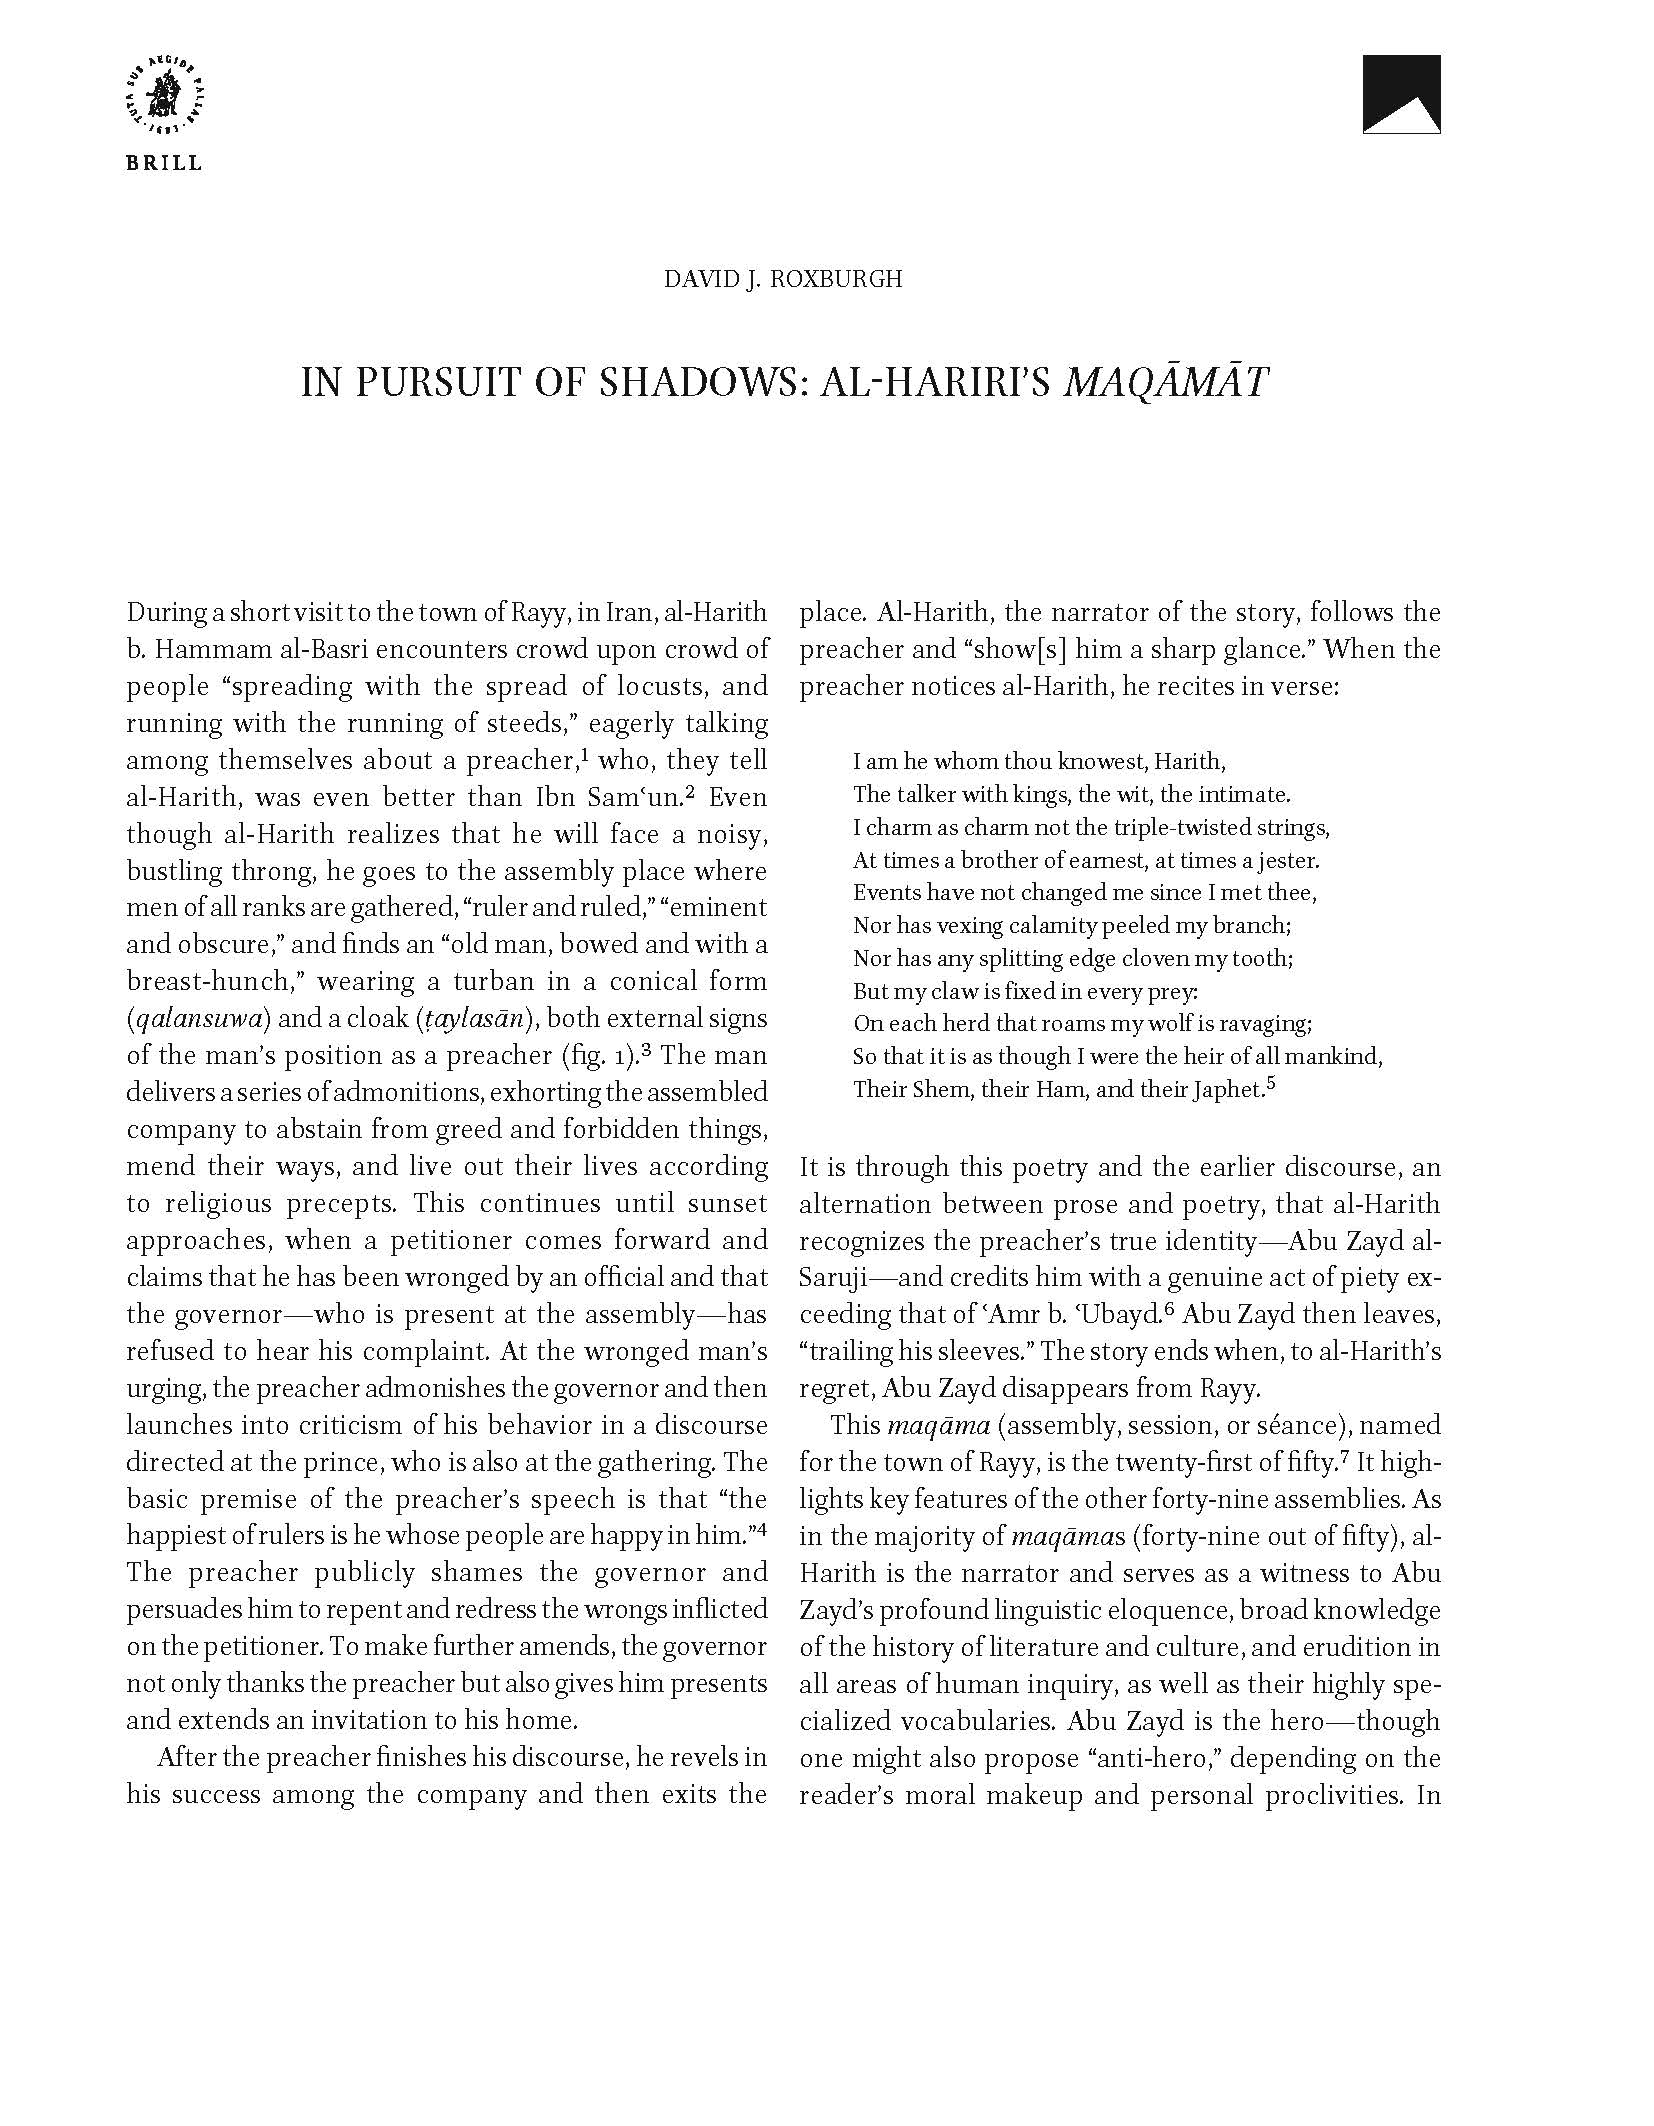 In Pursuit of Shadows: Al-Hariri's Maqamat